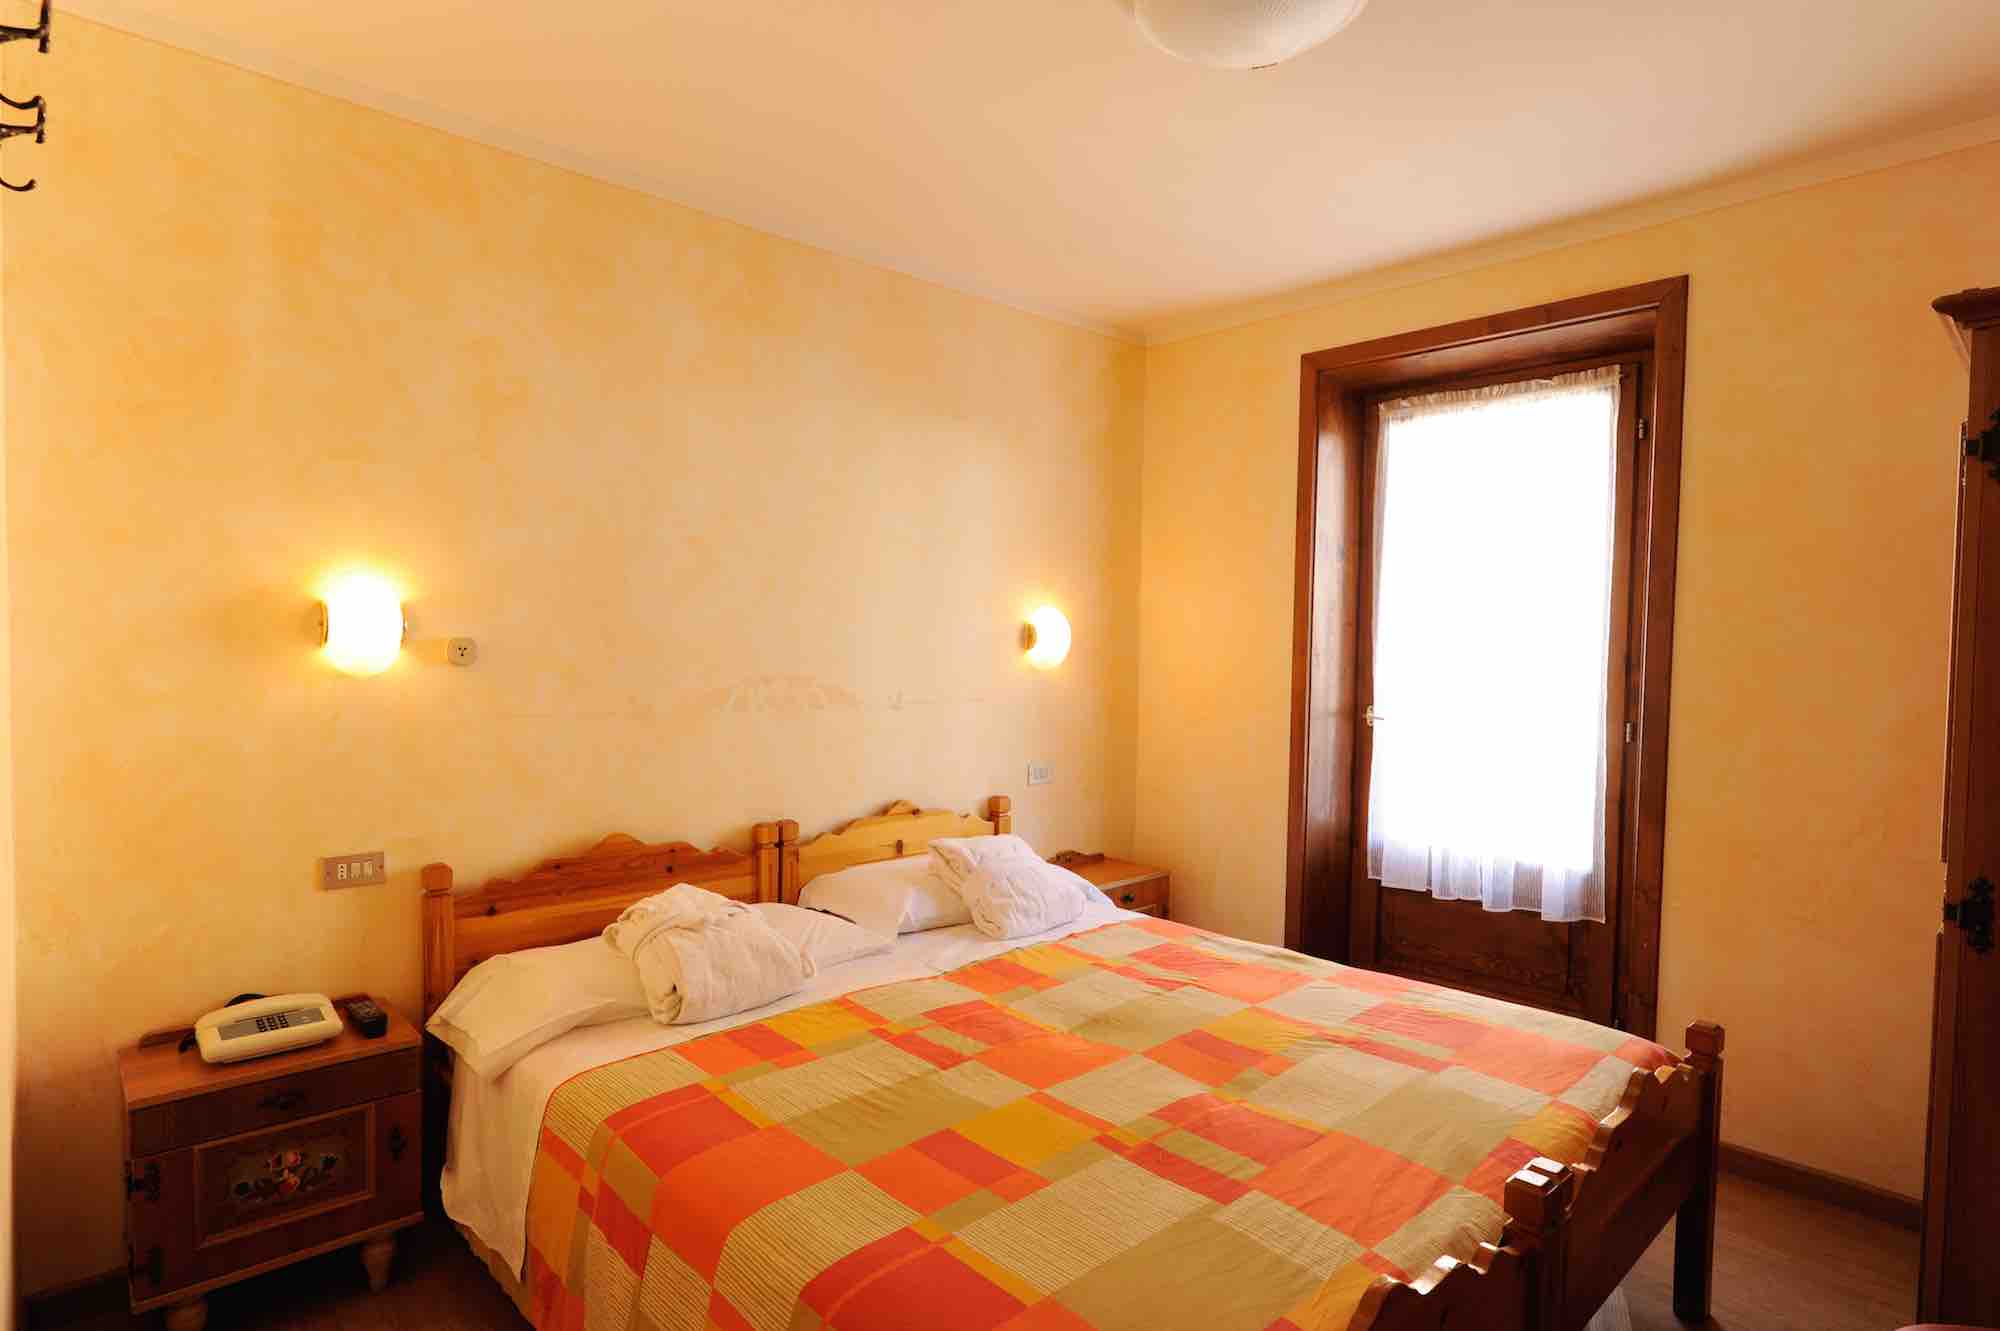 Hotel Camino - Via Compart, 445 - Room - Standard  3